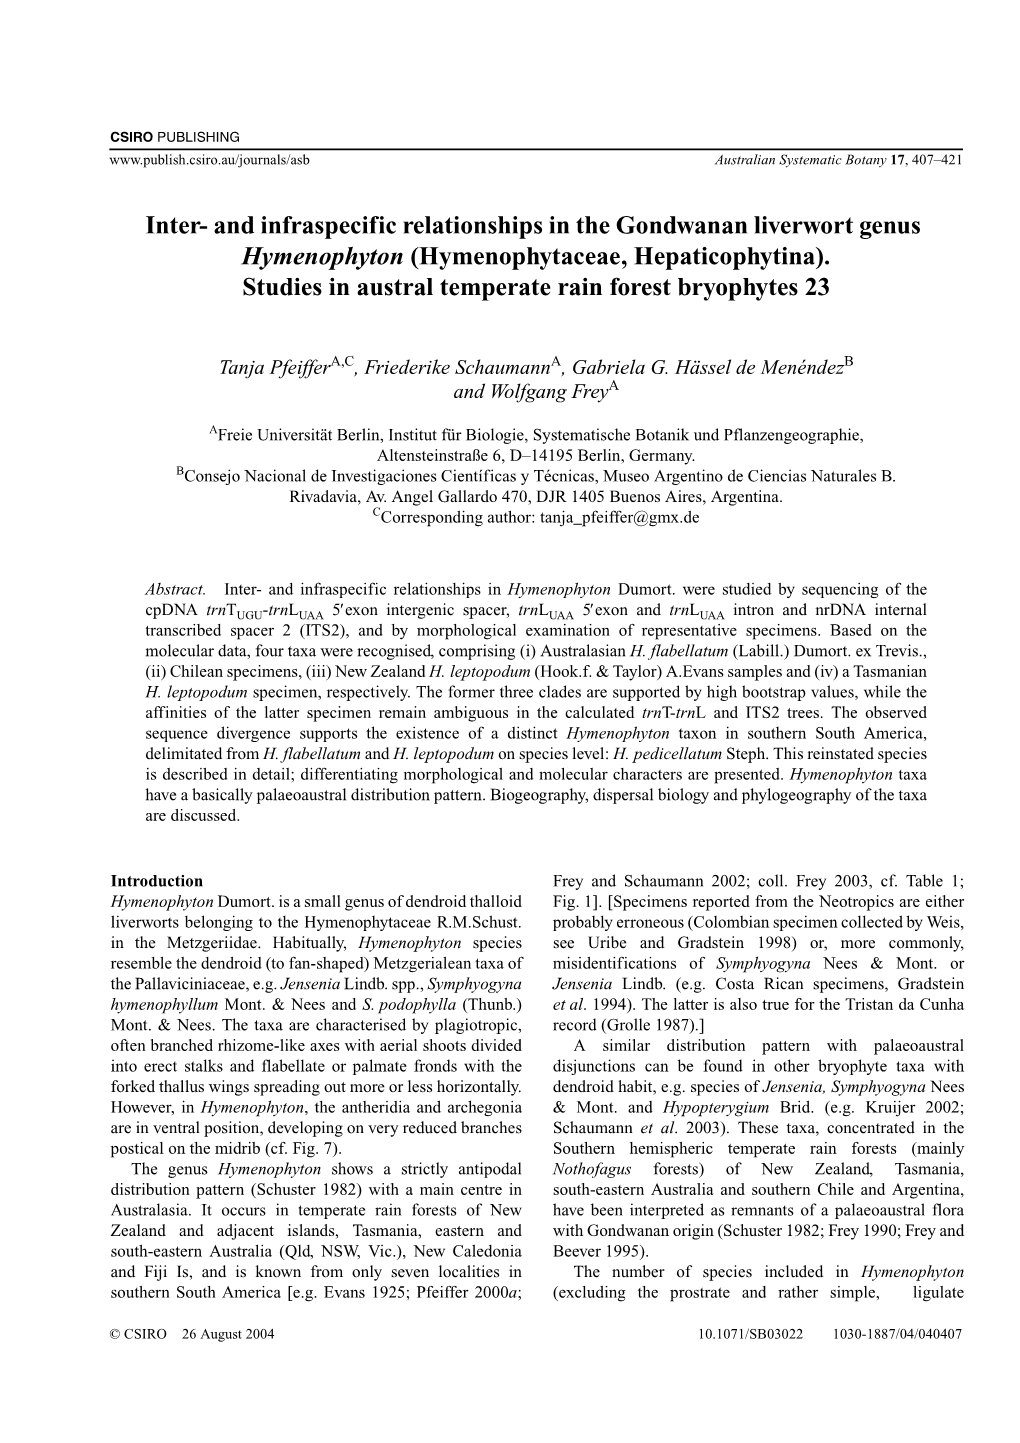 Inter- and Infraspecific Relationships in the Gondwanan Liverwort Genus Hymenophyton (Hymenophytaceae, Hepaticophytina)